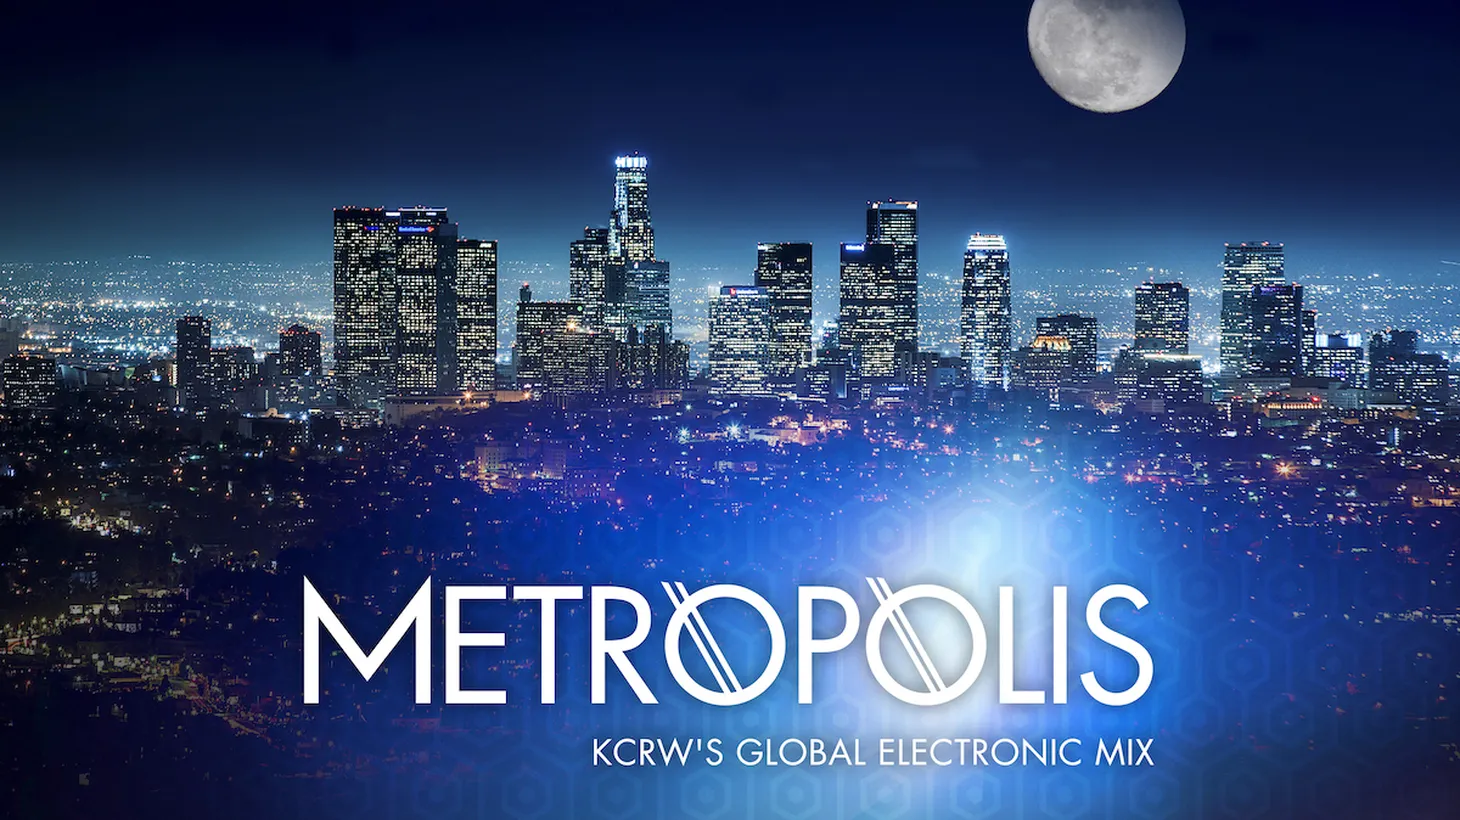 Metropolis playlist, August 14, 2021.